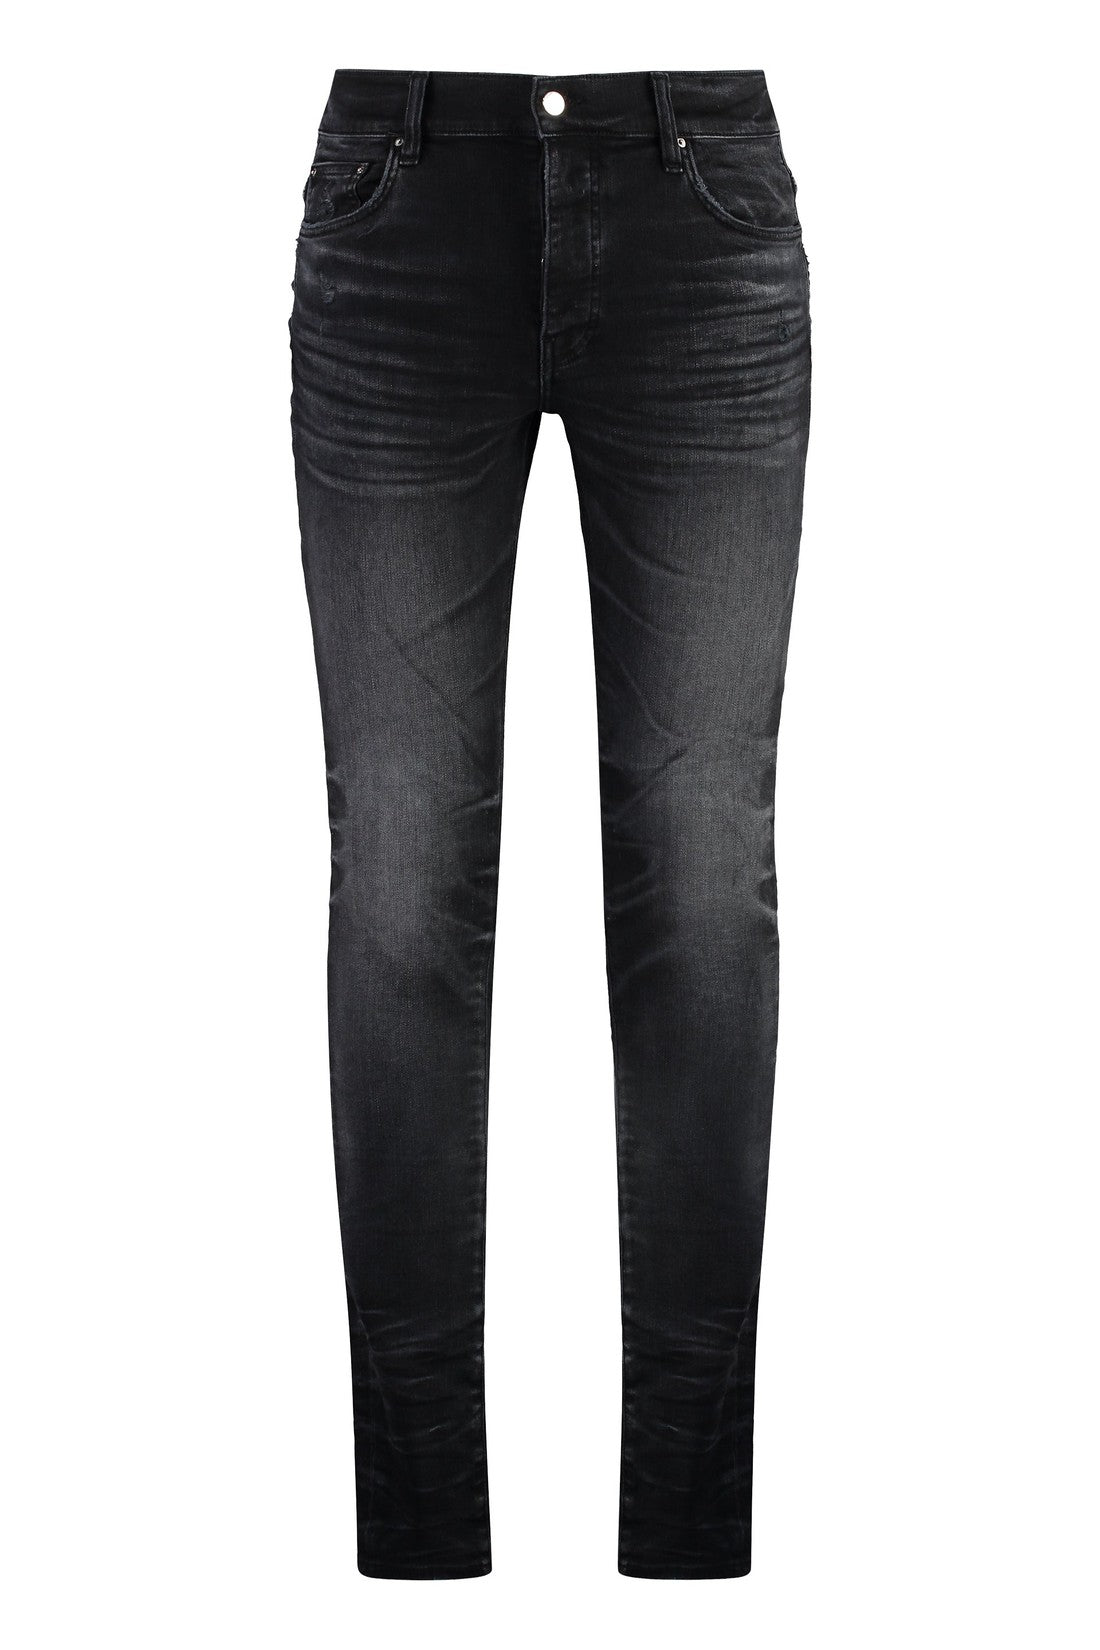 AMIRI-OUTLET-SALE-Stack Skinny jeans-ARCHIVIST